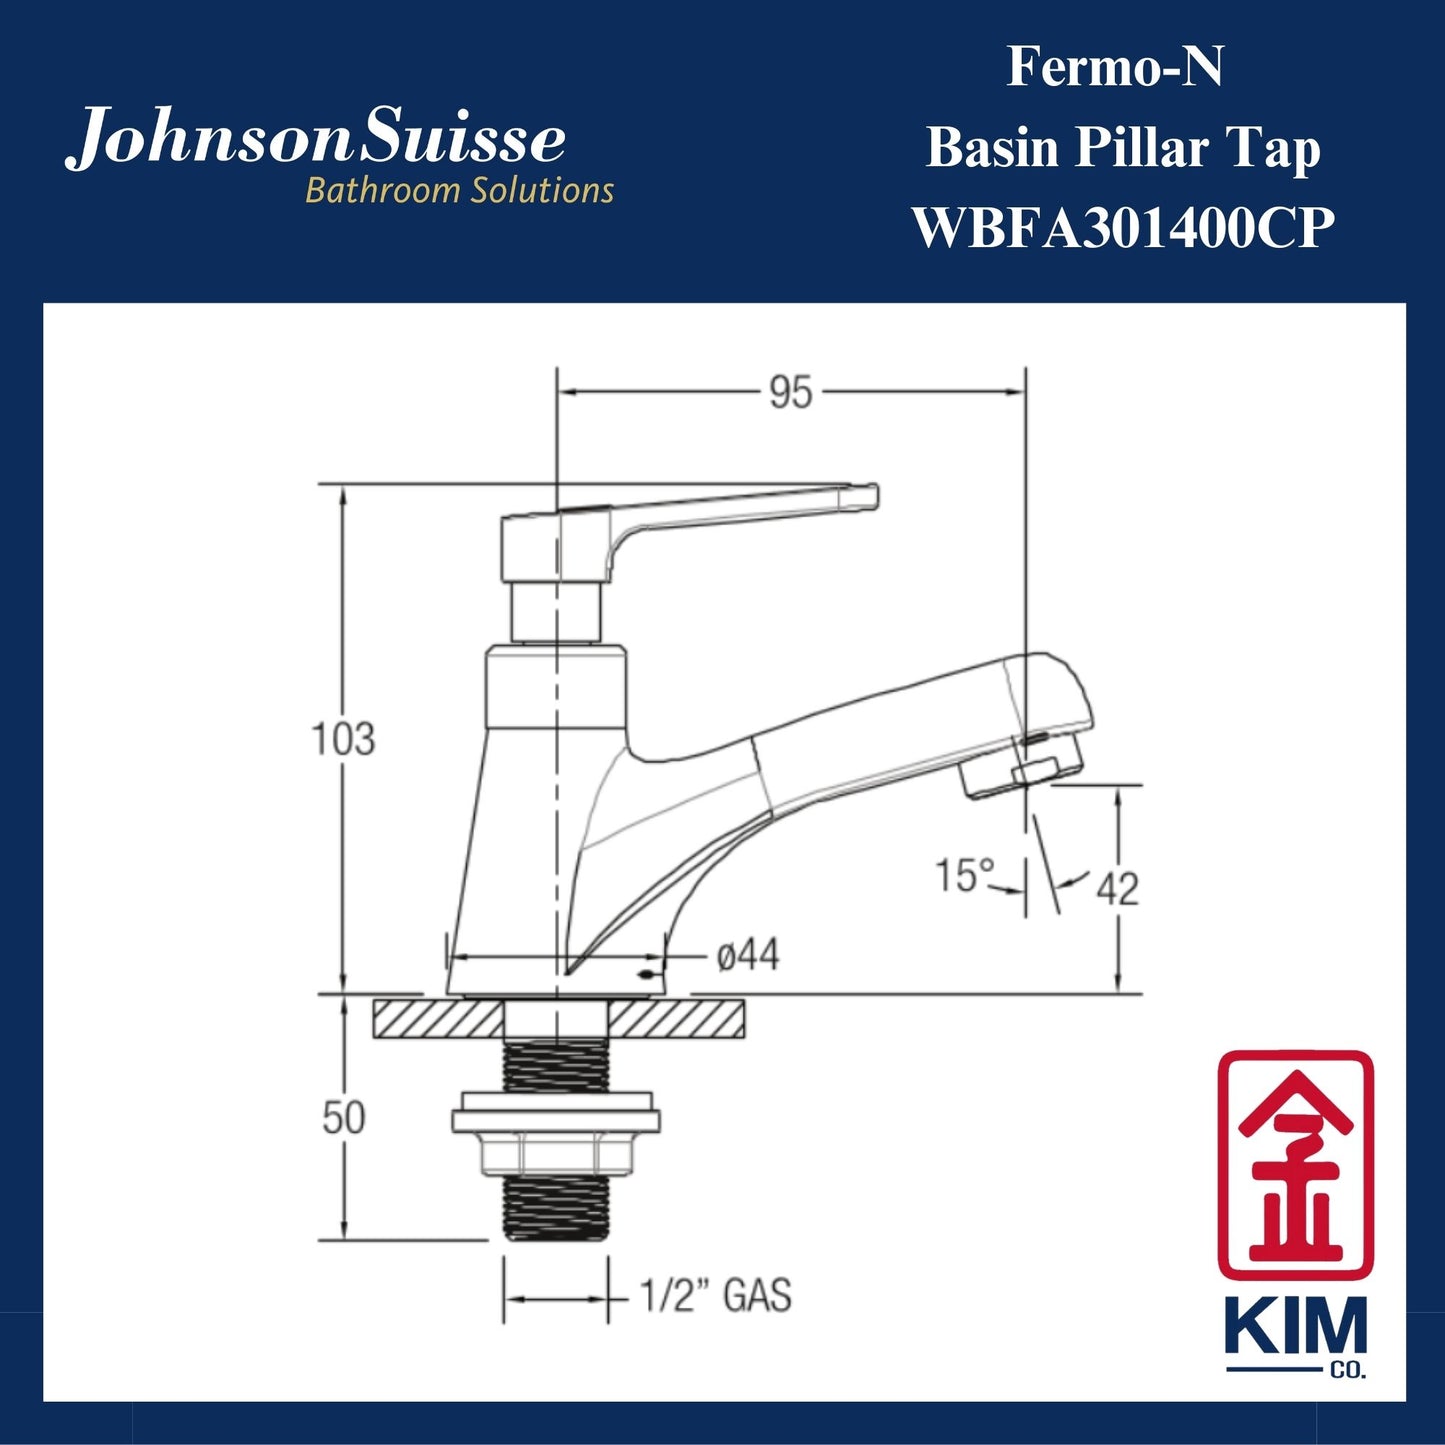 Johnson Suisse Fermo-N Basin Pillar Tap (WBFA301400CP)